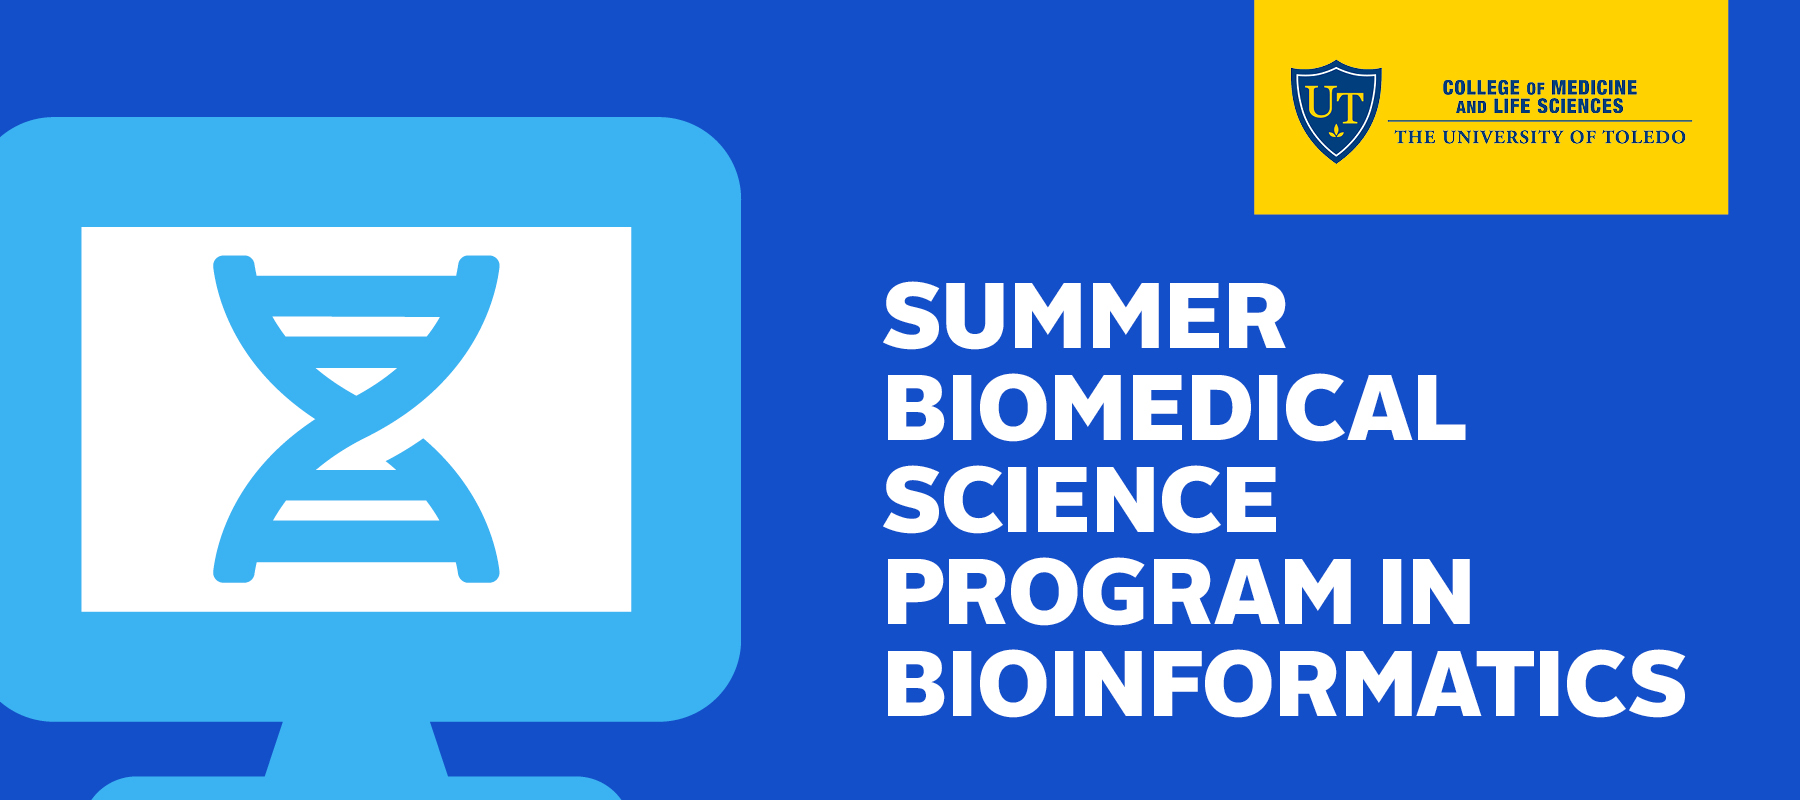 Artwork for the Summer Biomedical Science Program in Bioinformatics.